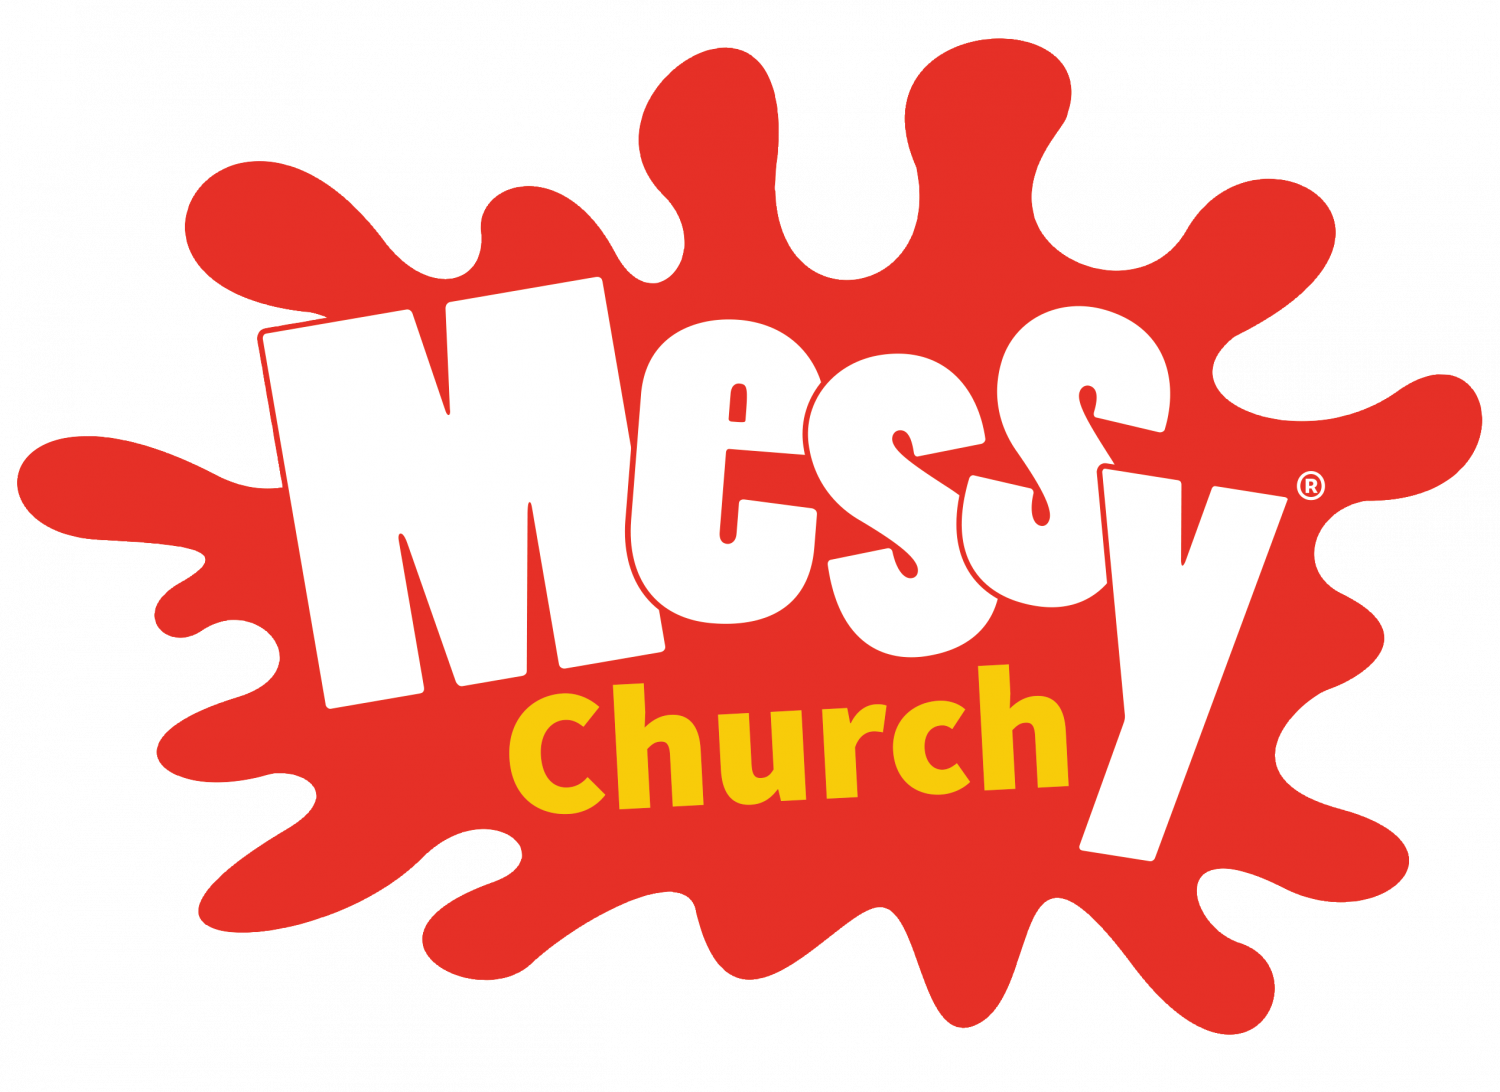 Messy Church logo © Bible Reading Fellowship 2021. See messychurch.org.uk